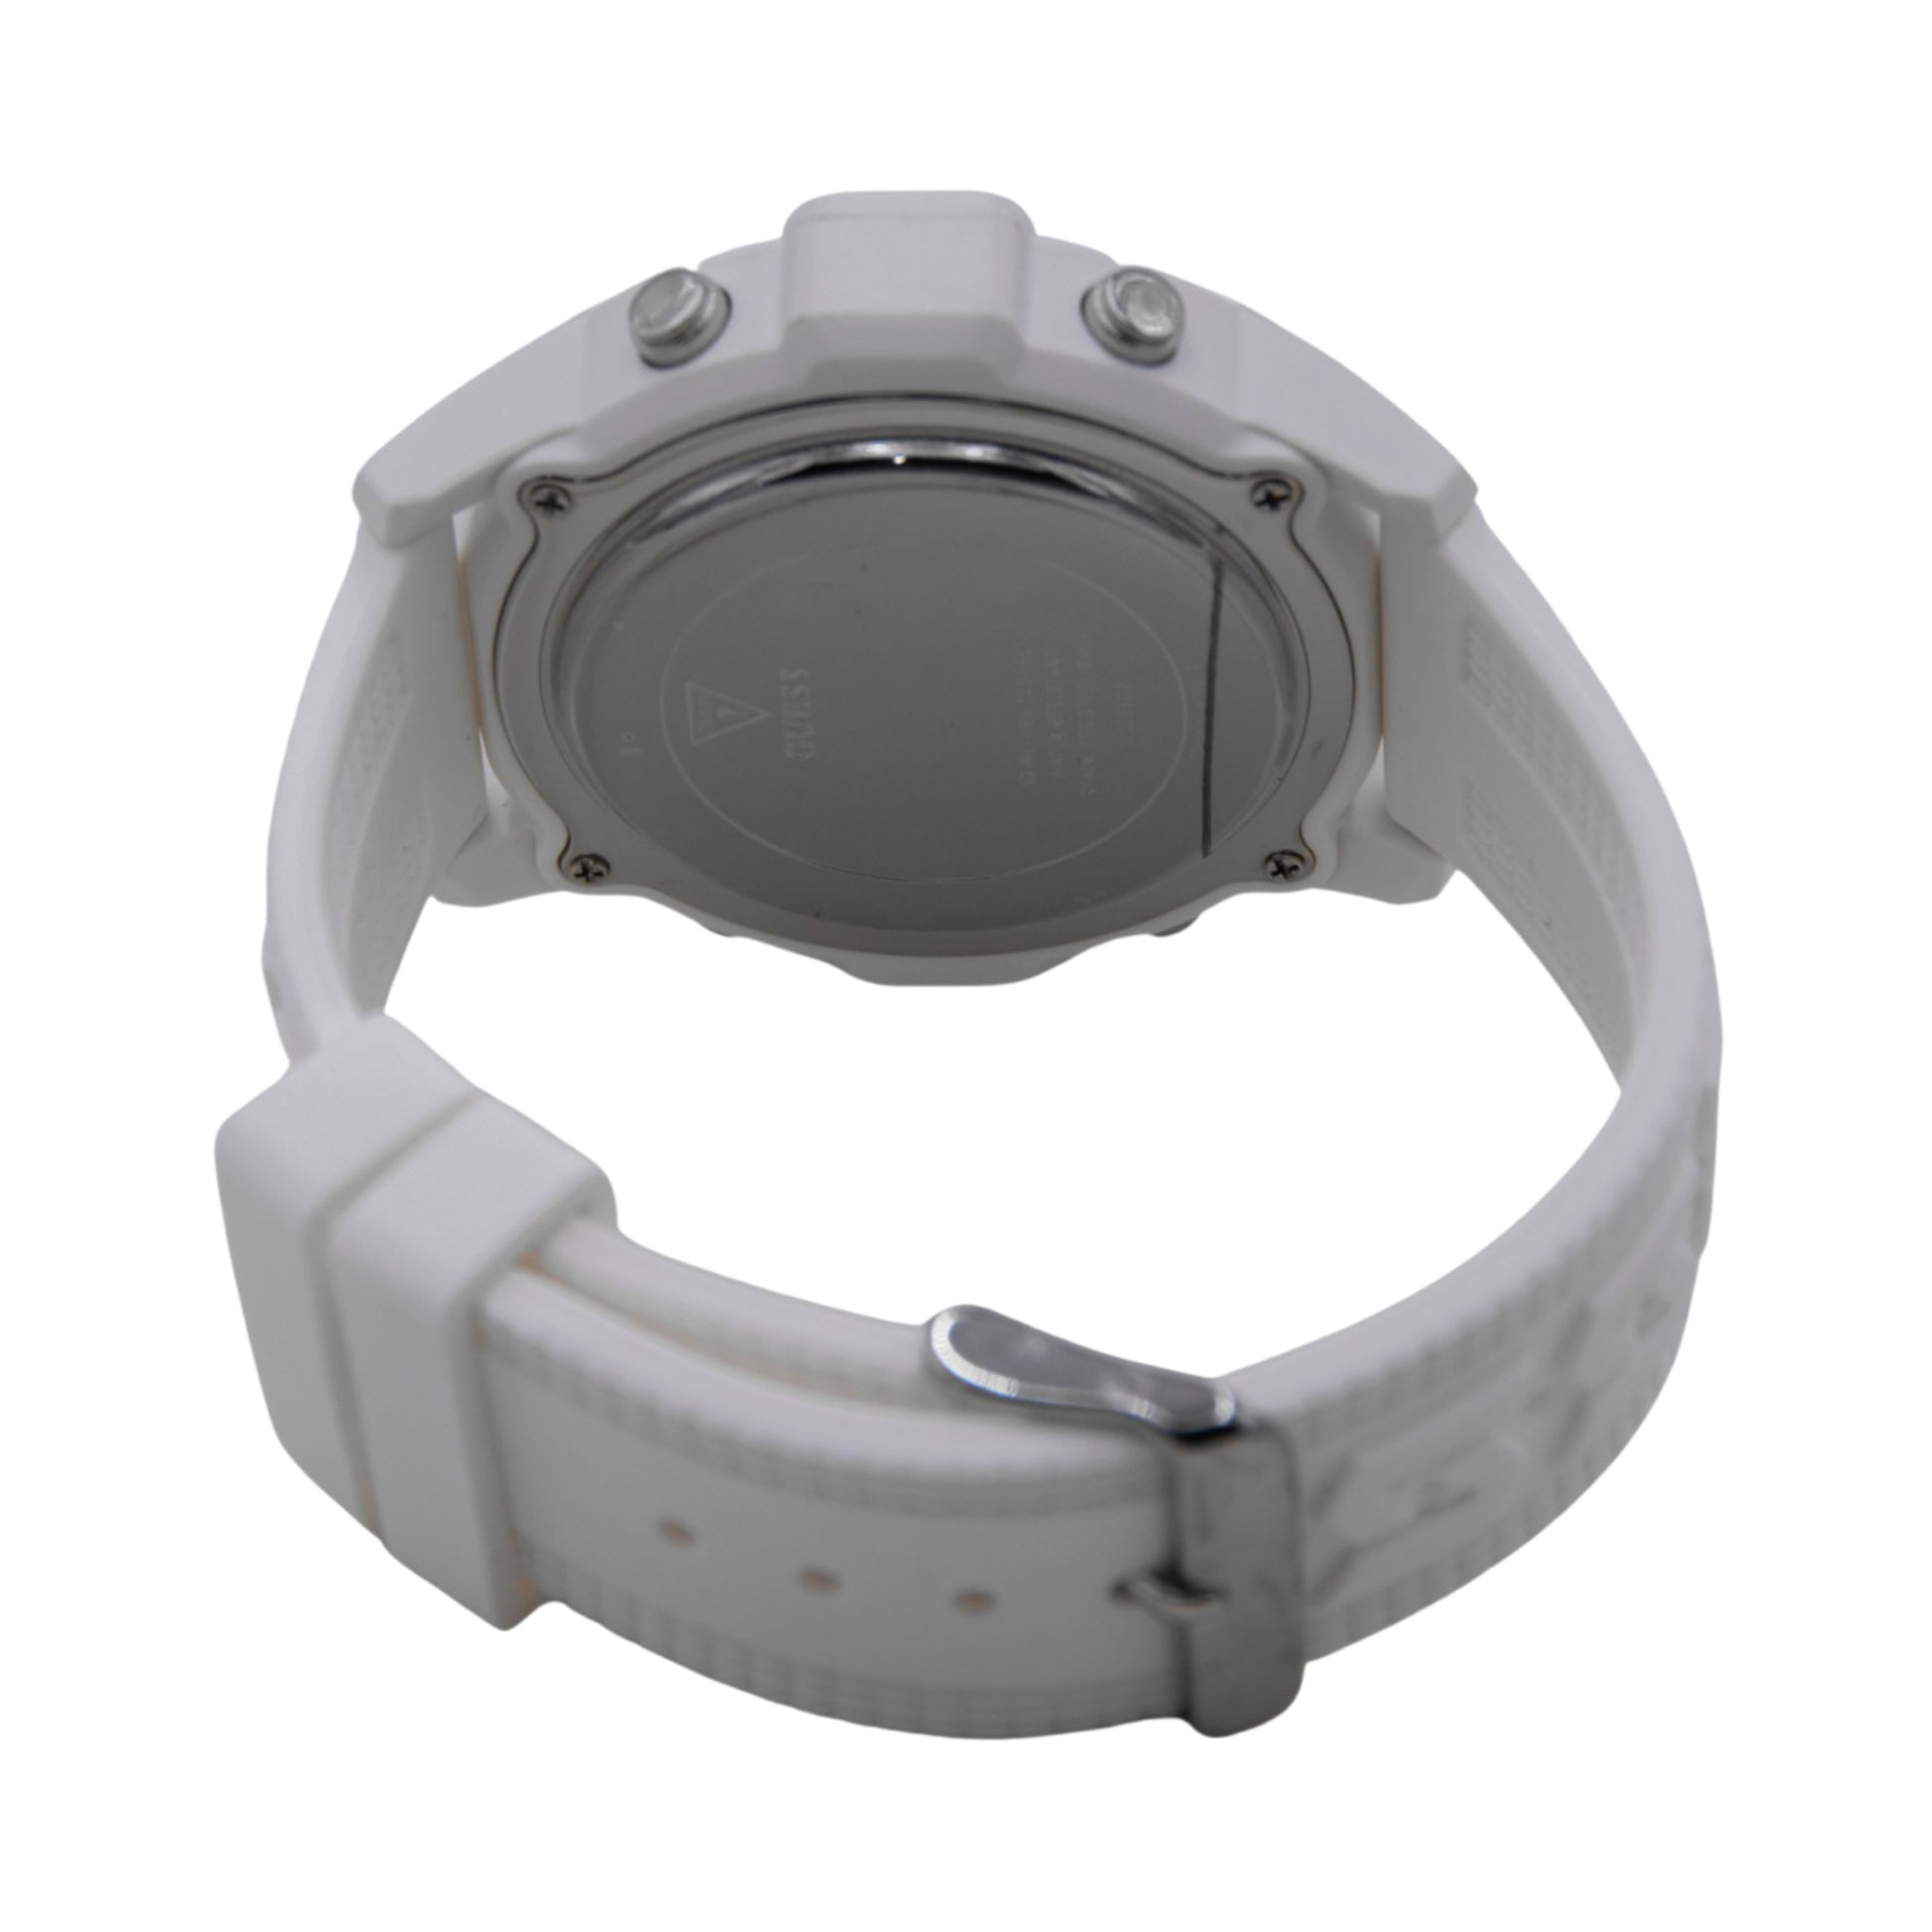 Guess Charge Men's Alarm White Digital Dial Quartz Watch - U1299G2 - 91661509391